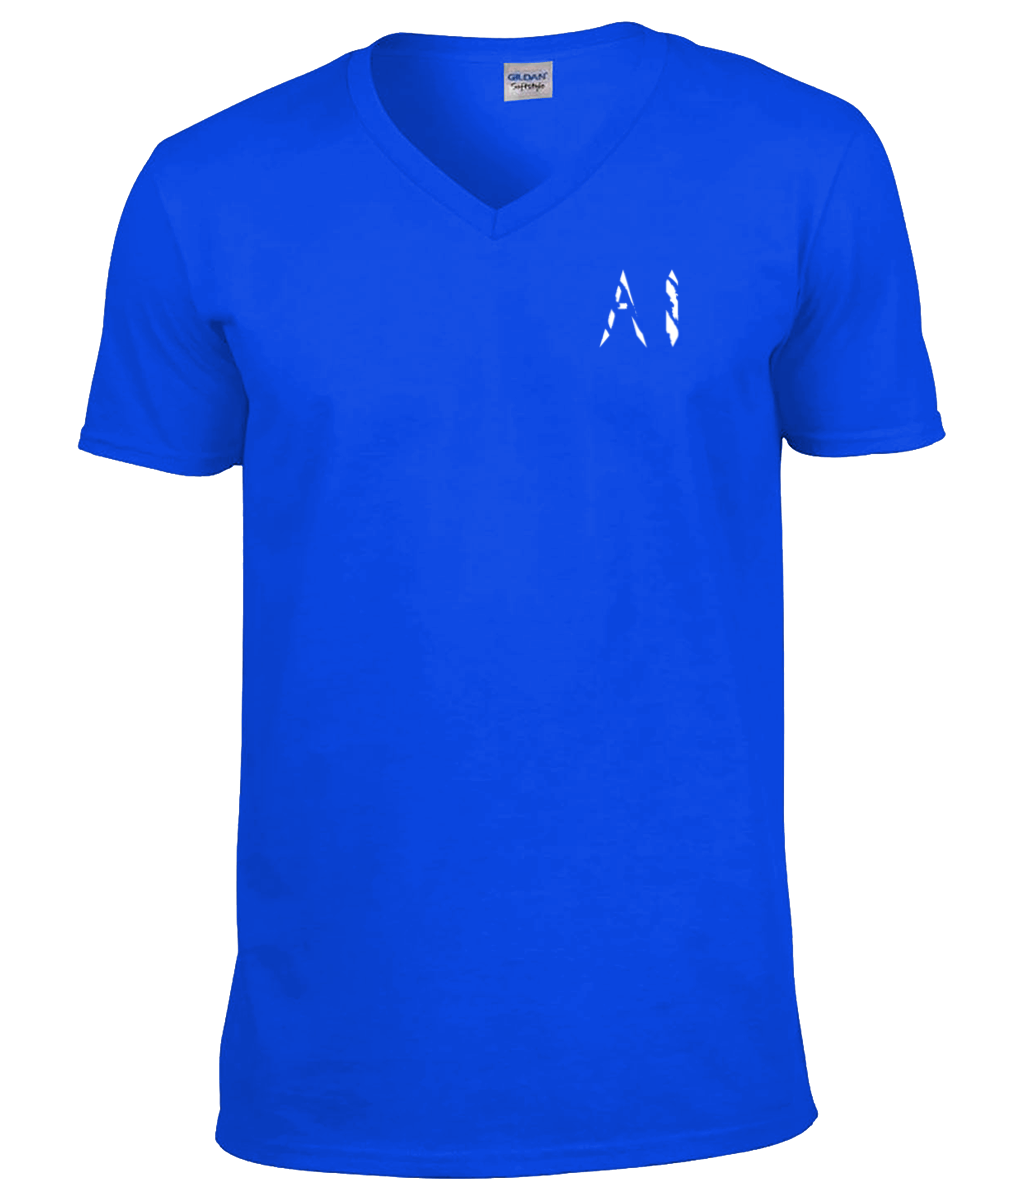 Womens dark blue Classic V Neck T-Shirt with black AI logo on left breast